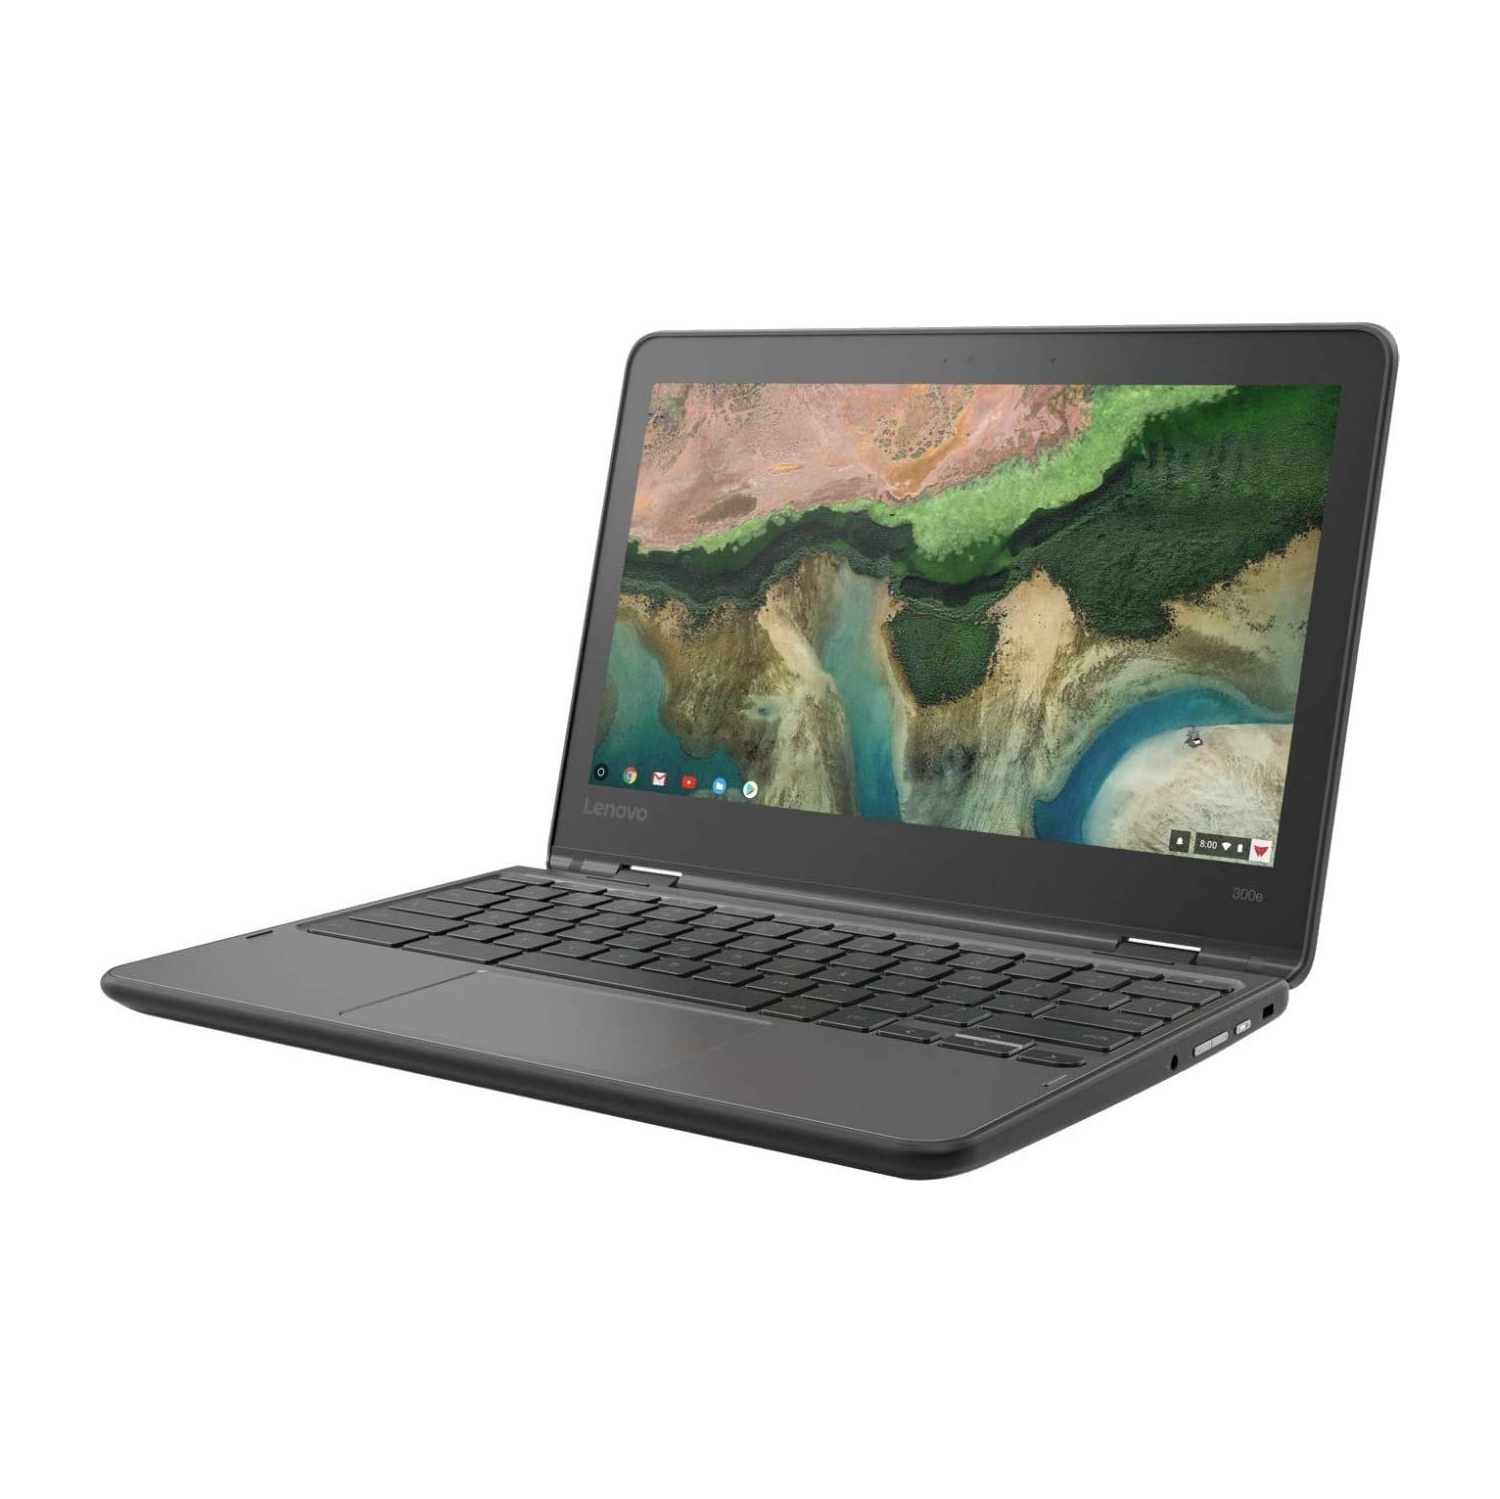 Refurbished (Good) - Lenovo 300e 2-in-1 Convertible Chromebook: 11.6-Inch HD IPS Touch Screen, MTK 8173c Quad-Core, 4GB RAM, 32GB SSD, Chrome OS "â€œ